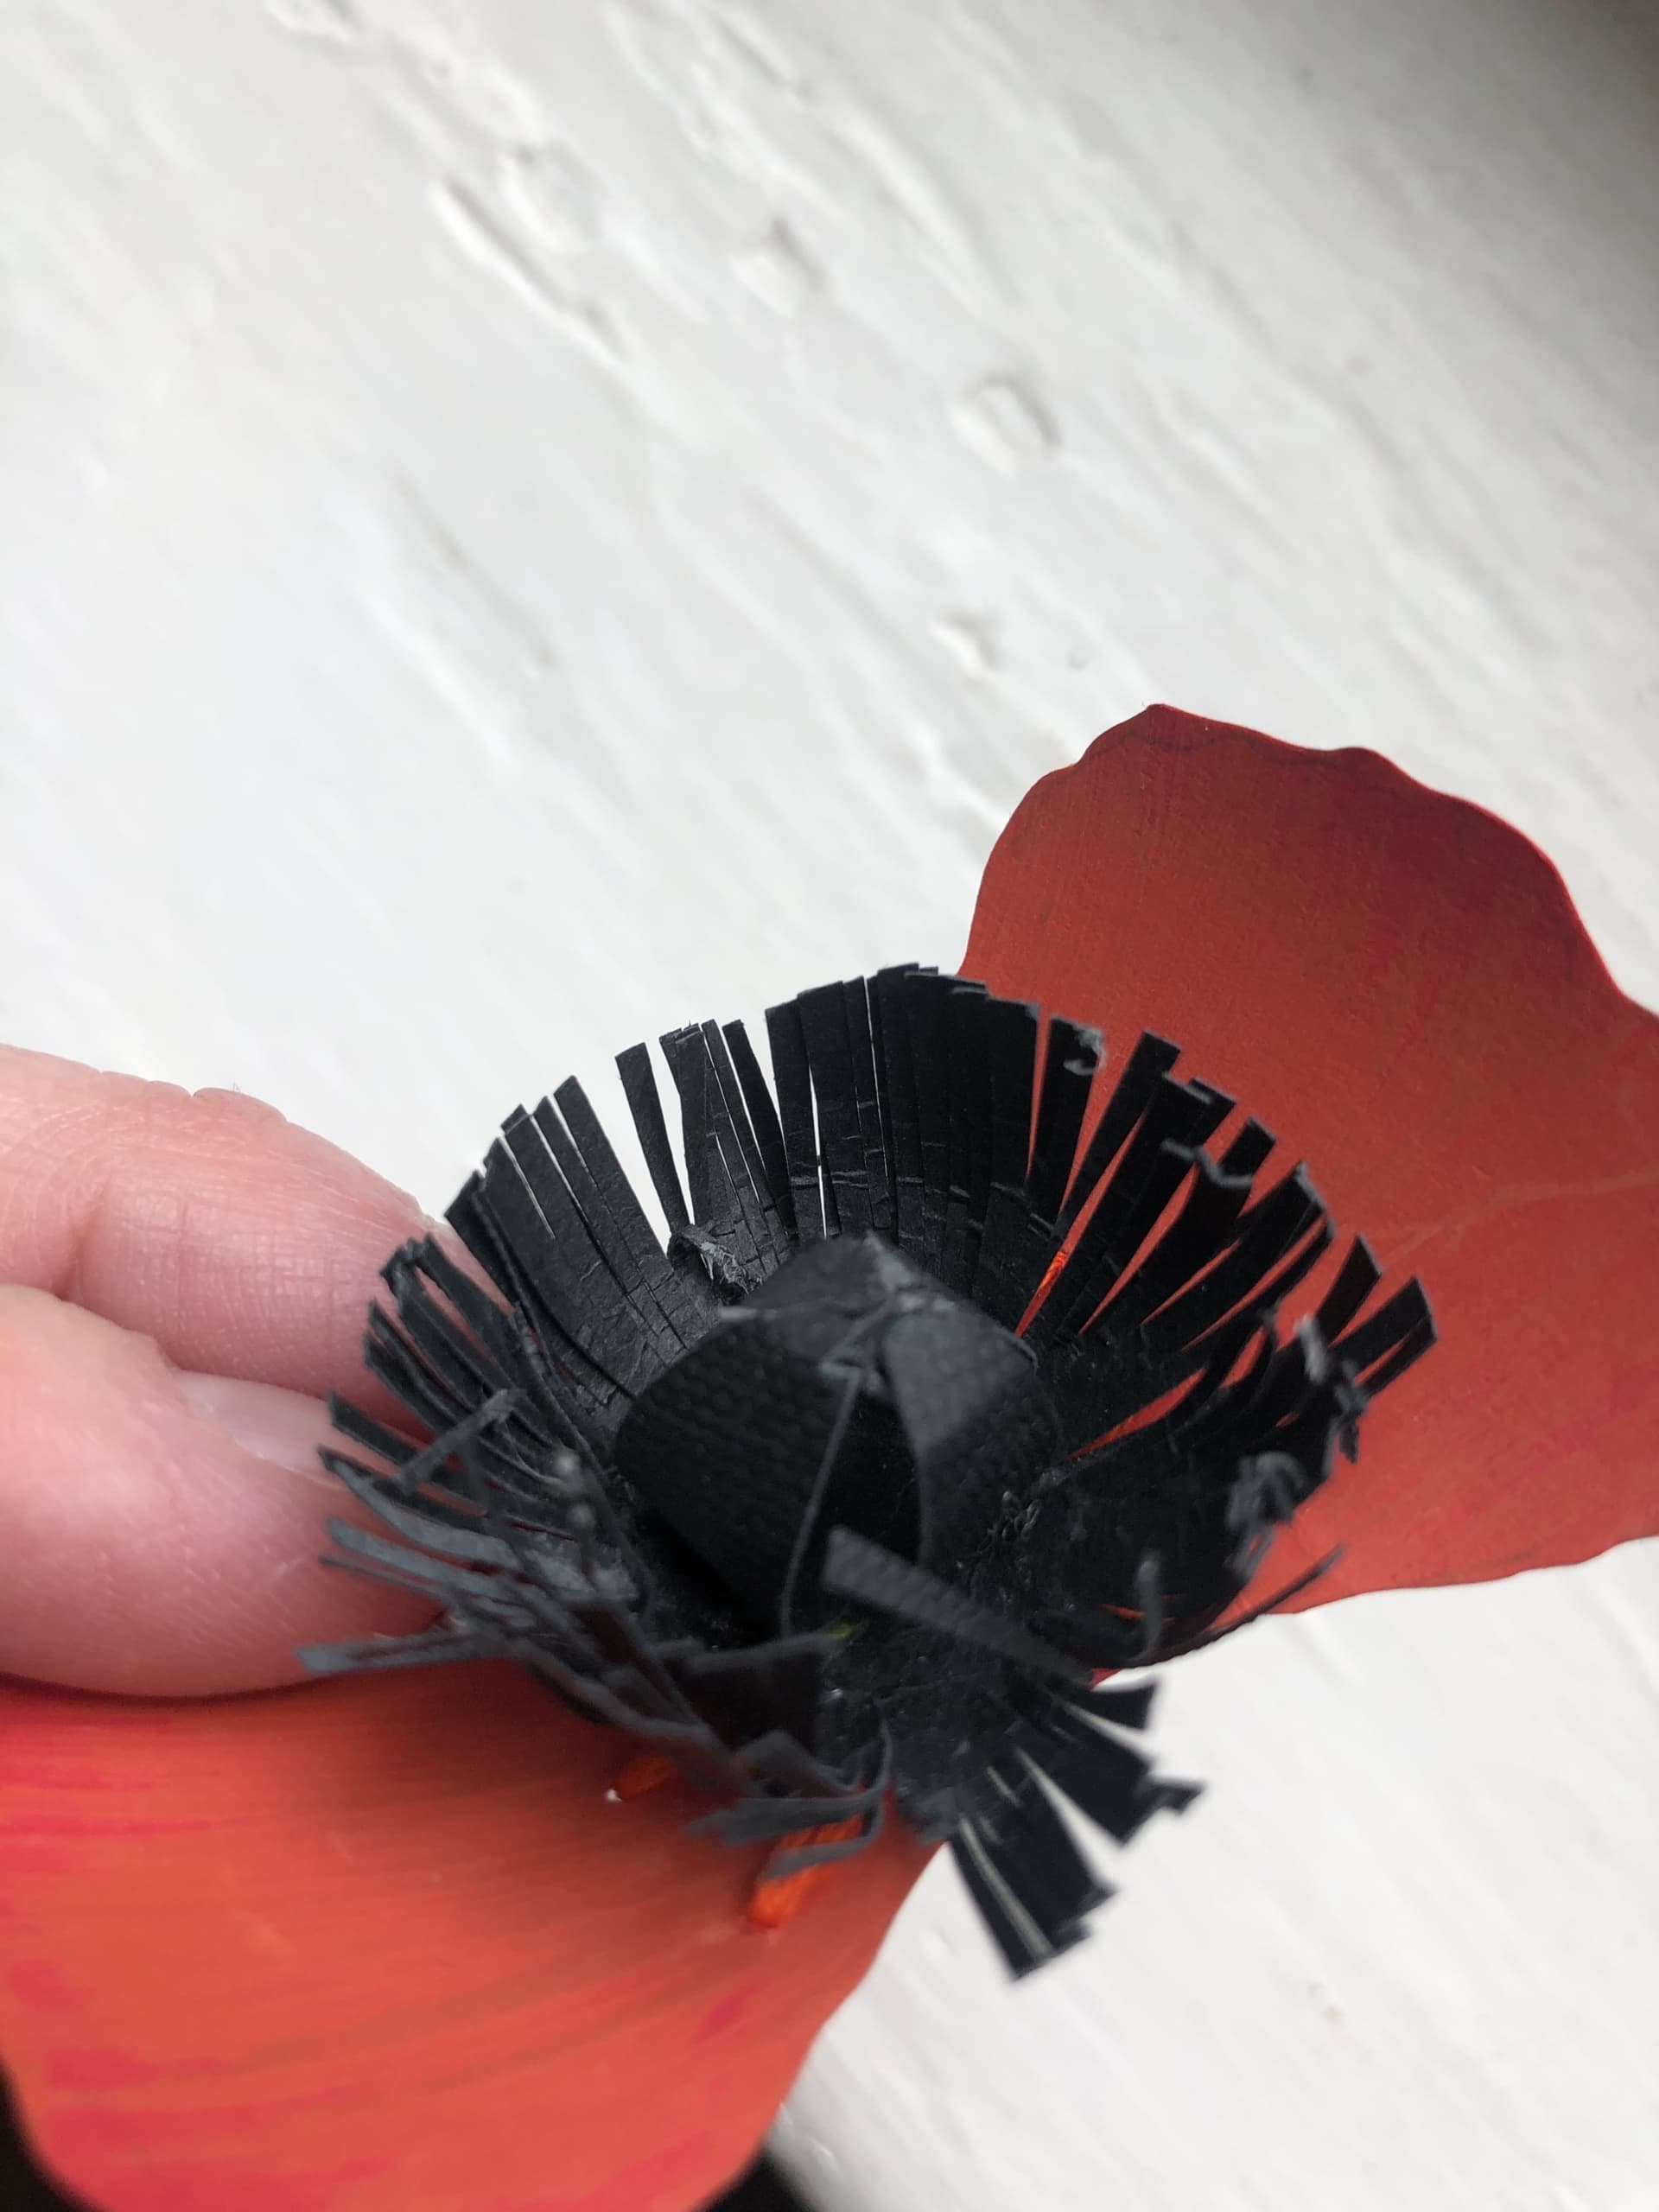 DIY paper poppy pin for memorial day